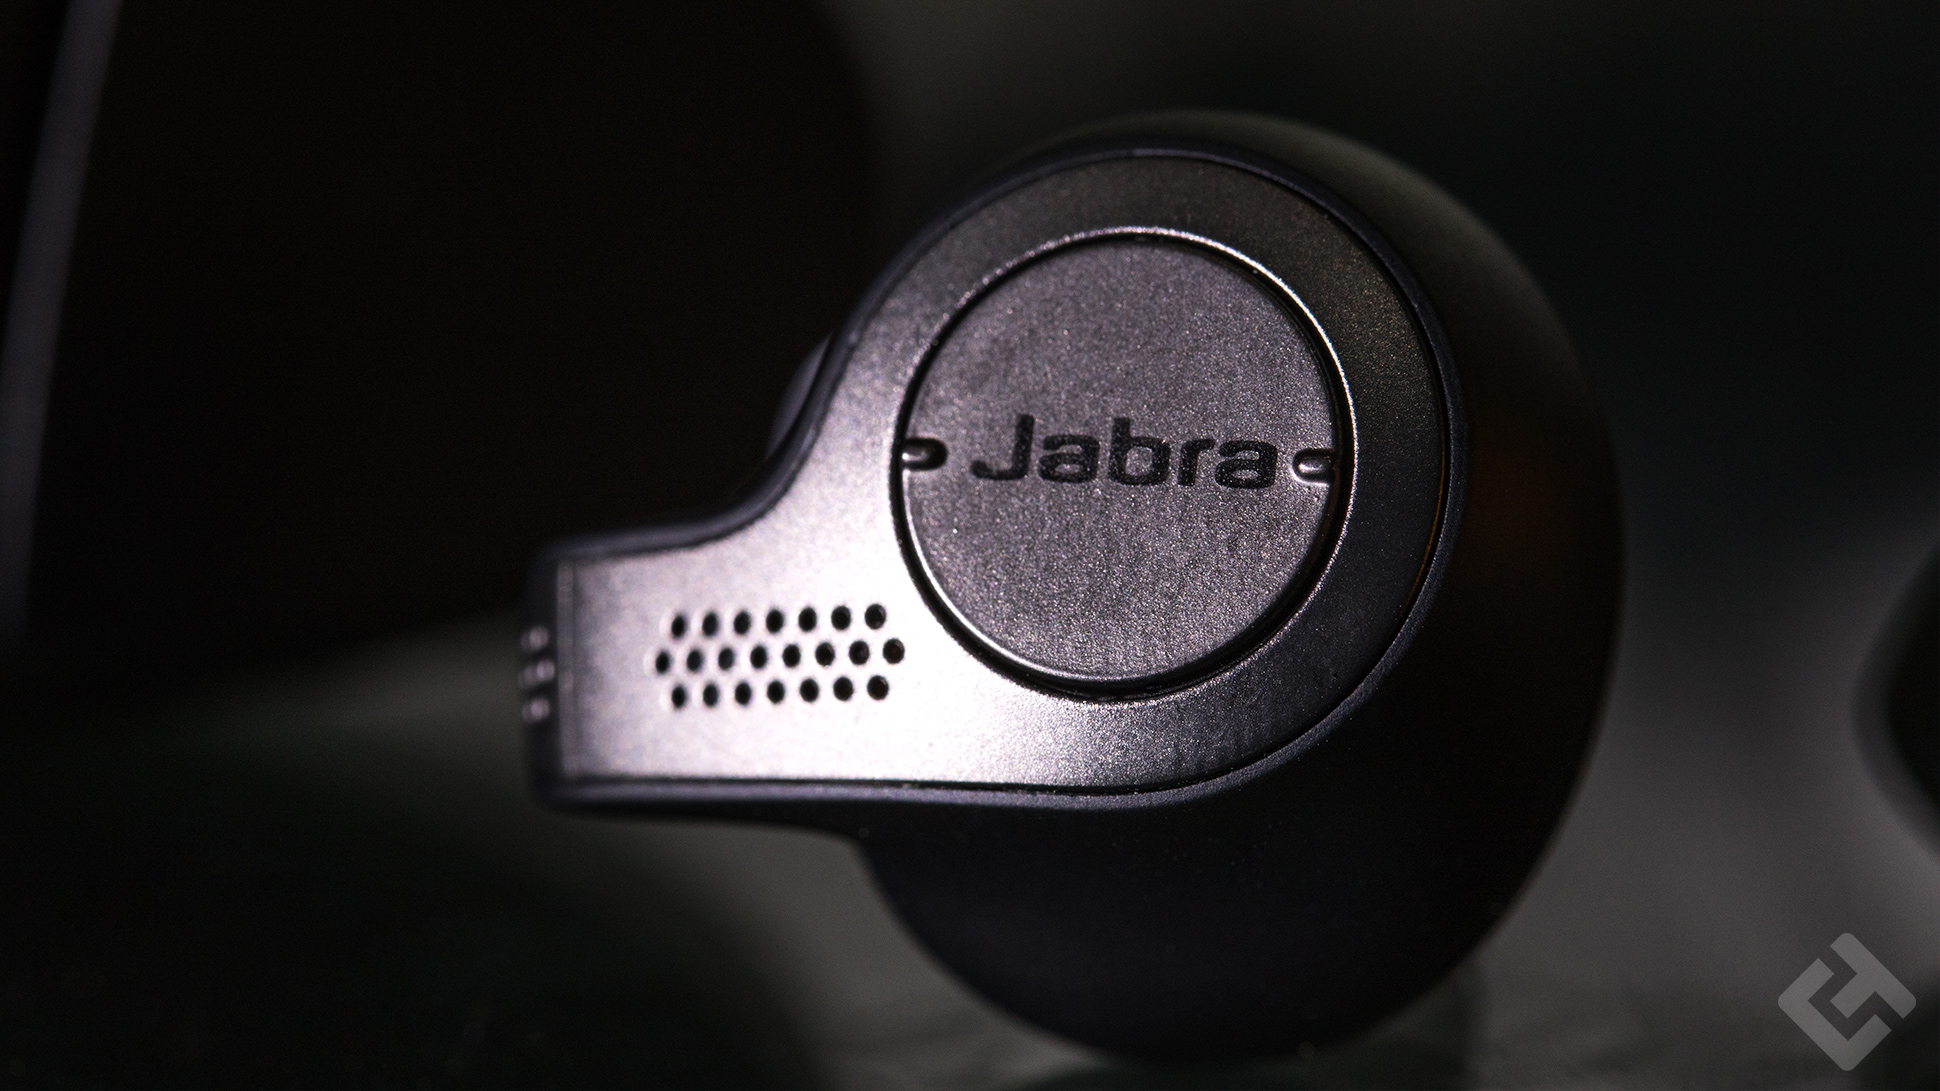 Jabra Evolve 65t - Design